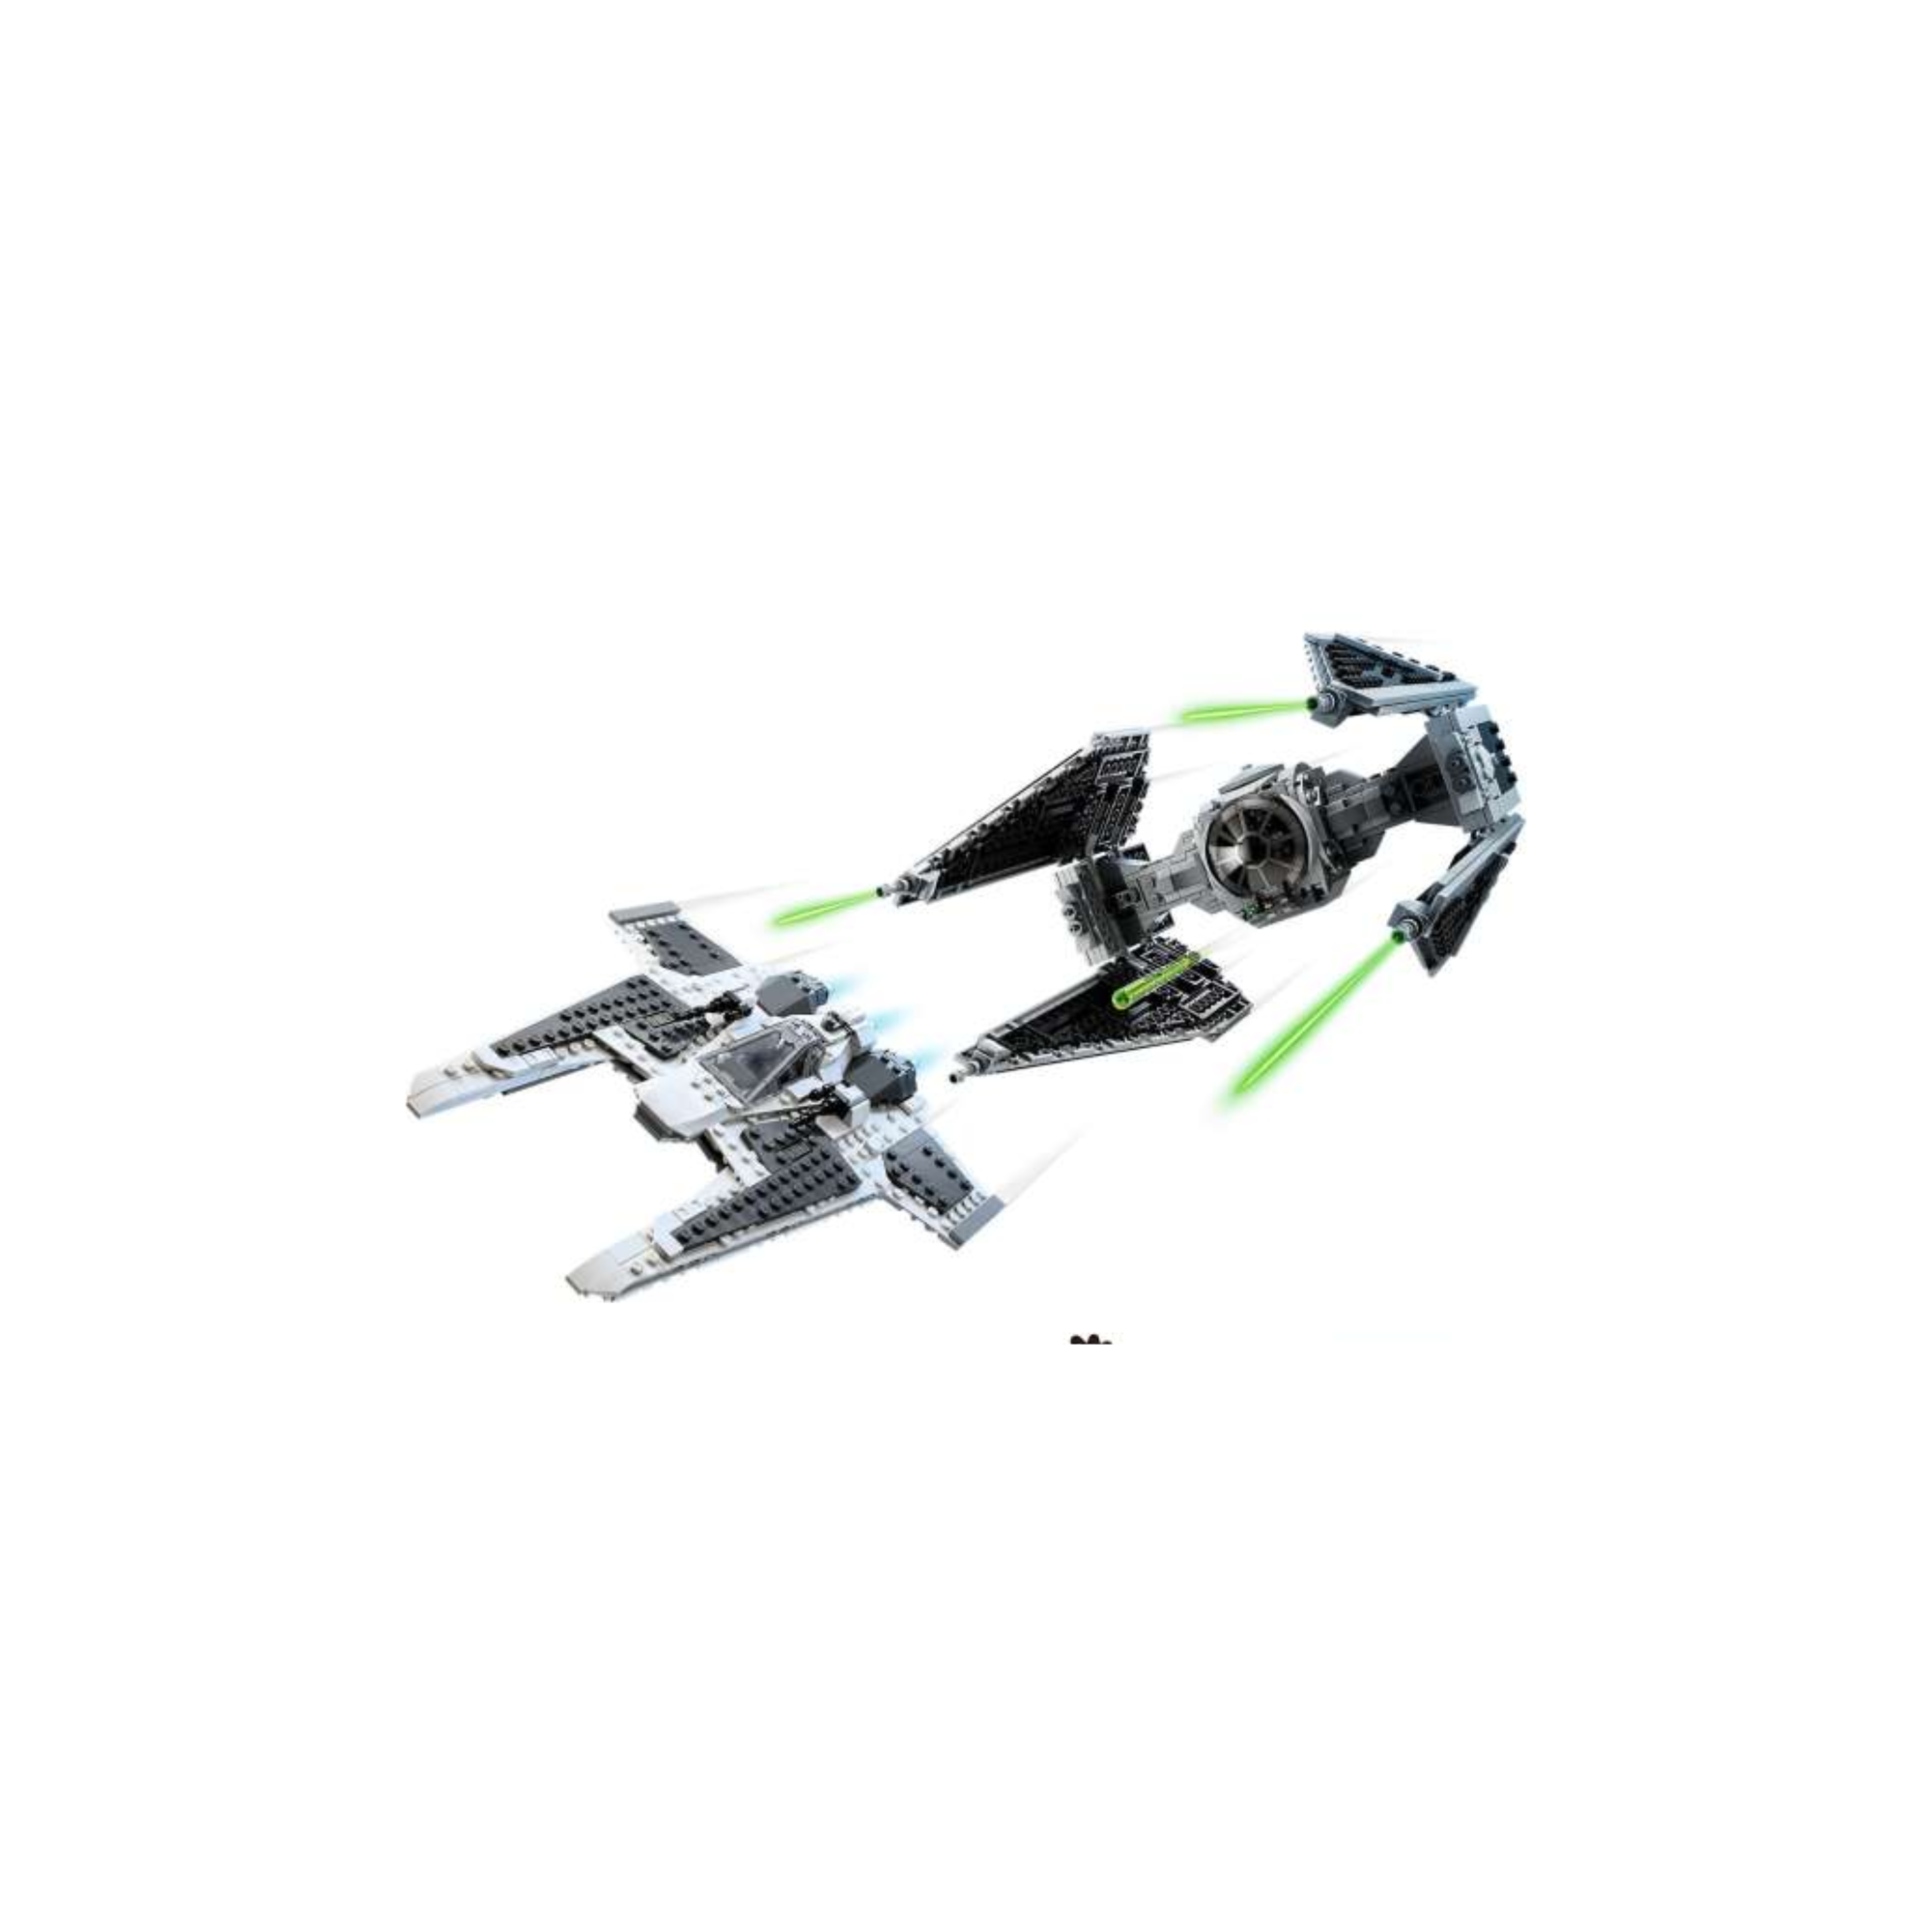 Lego Star Wars Mandalorian Fang Fighter vs TIE Interceptor